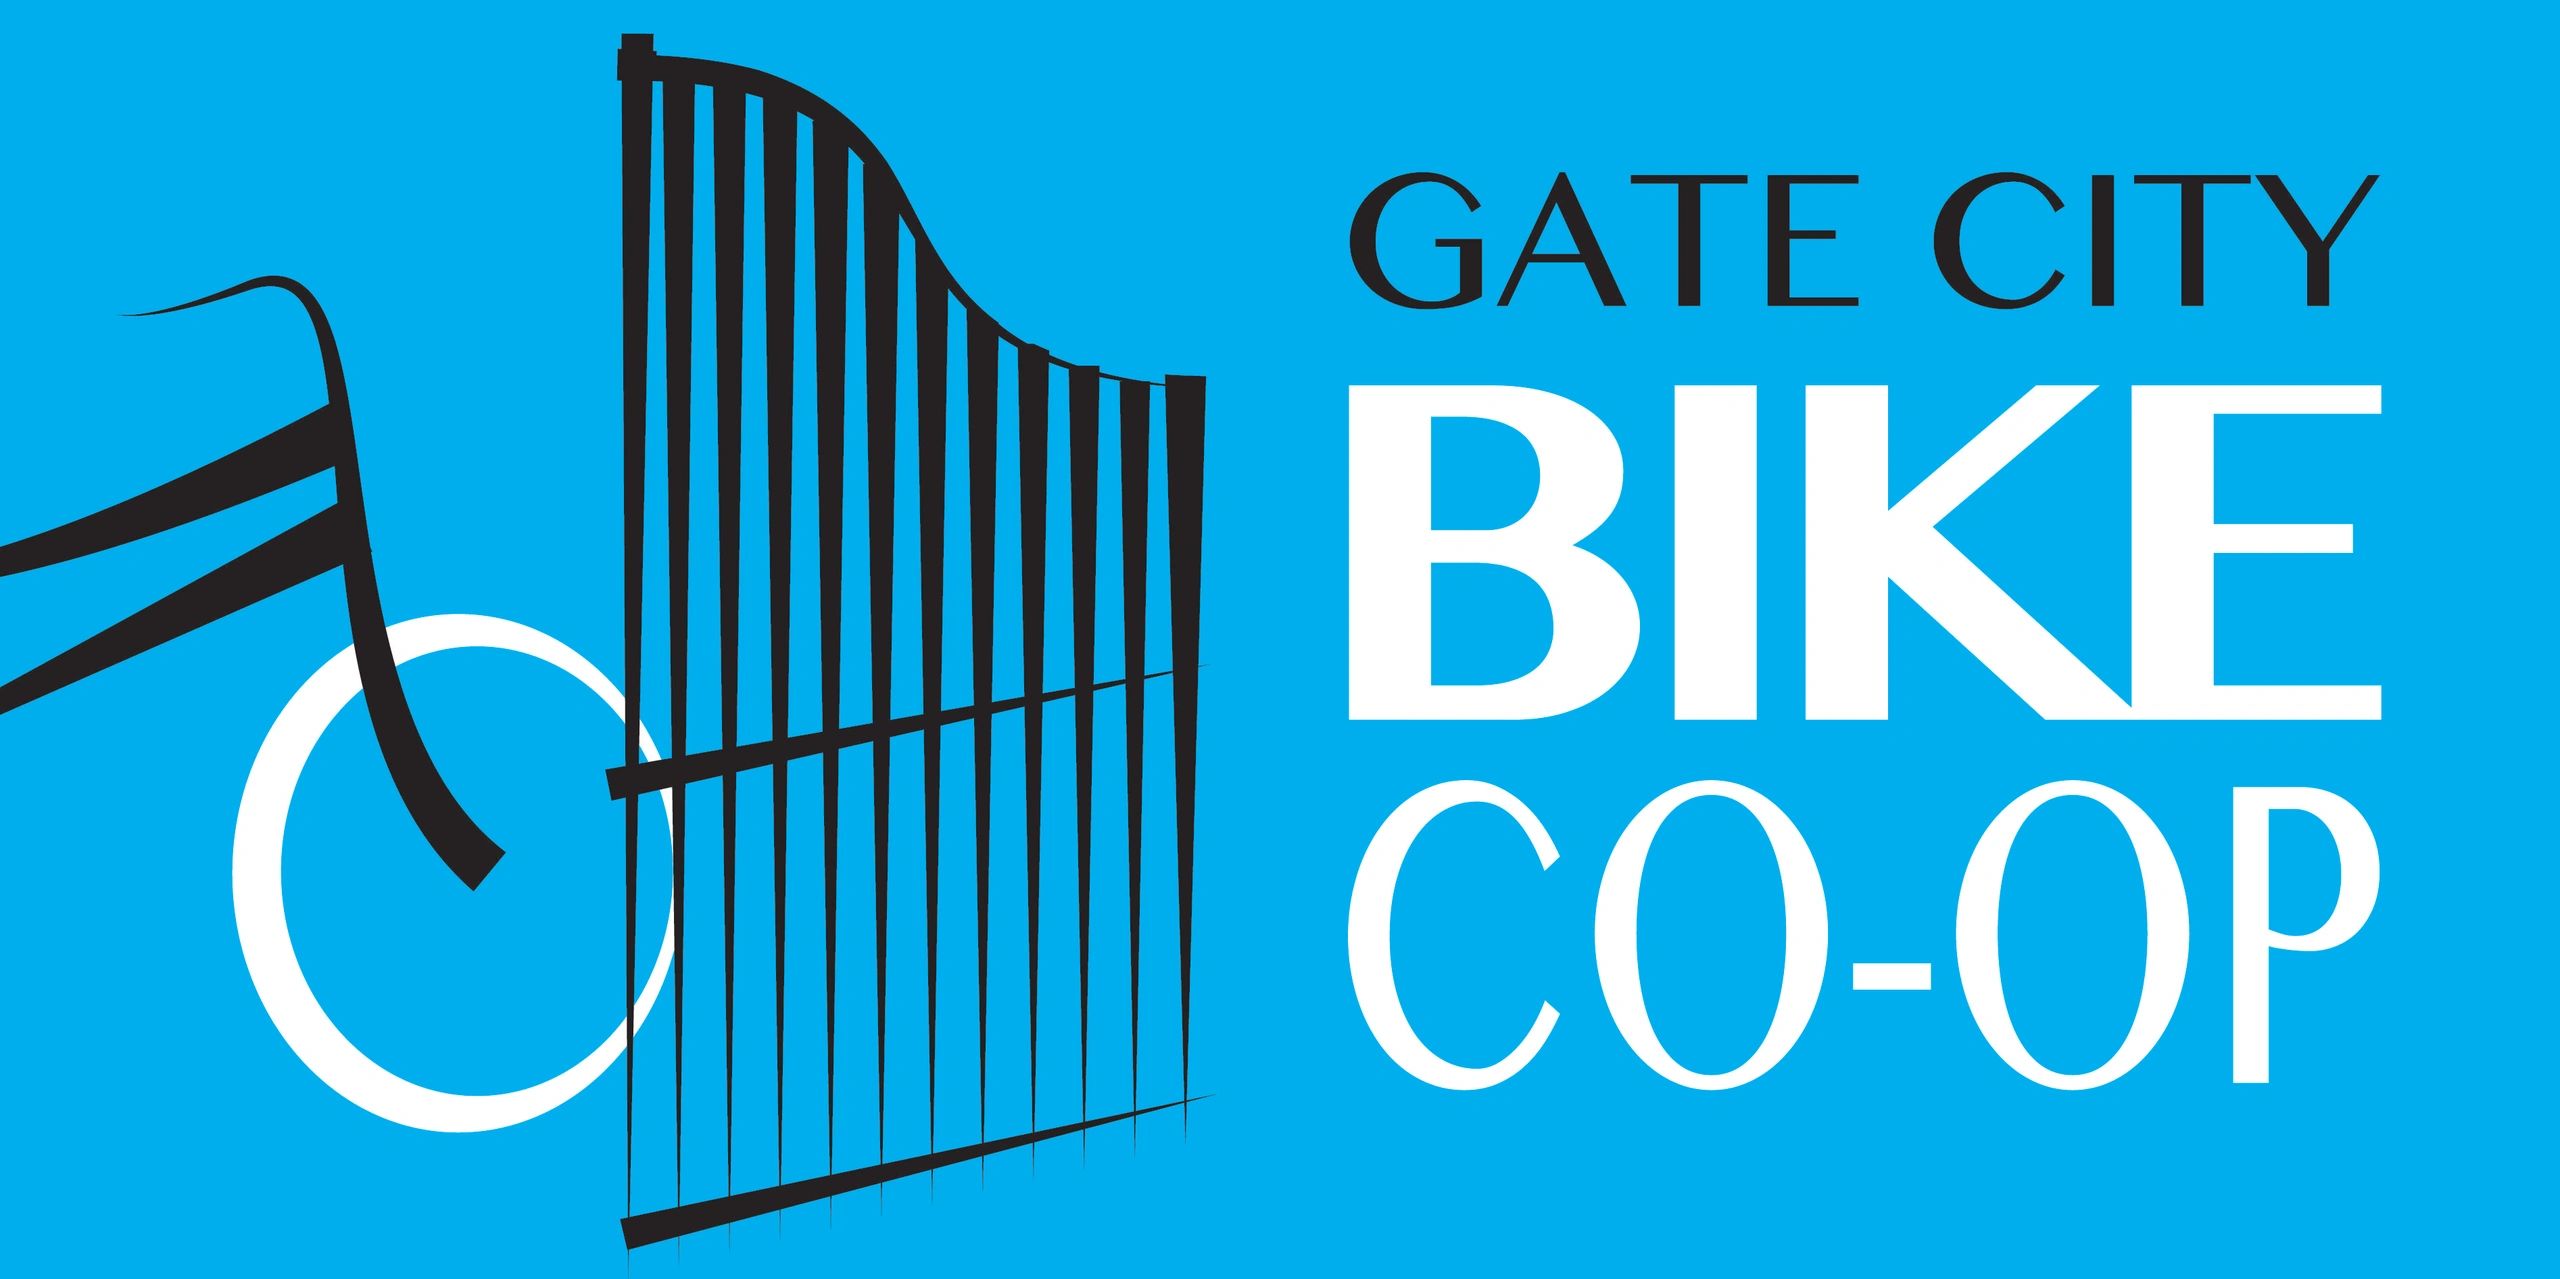 Gate City Bike Coop - Bicycle Recycling, Community Bike Shop